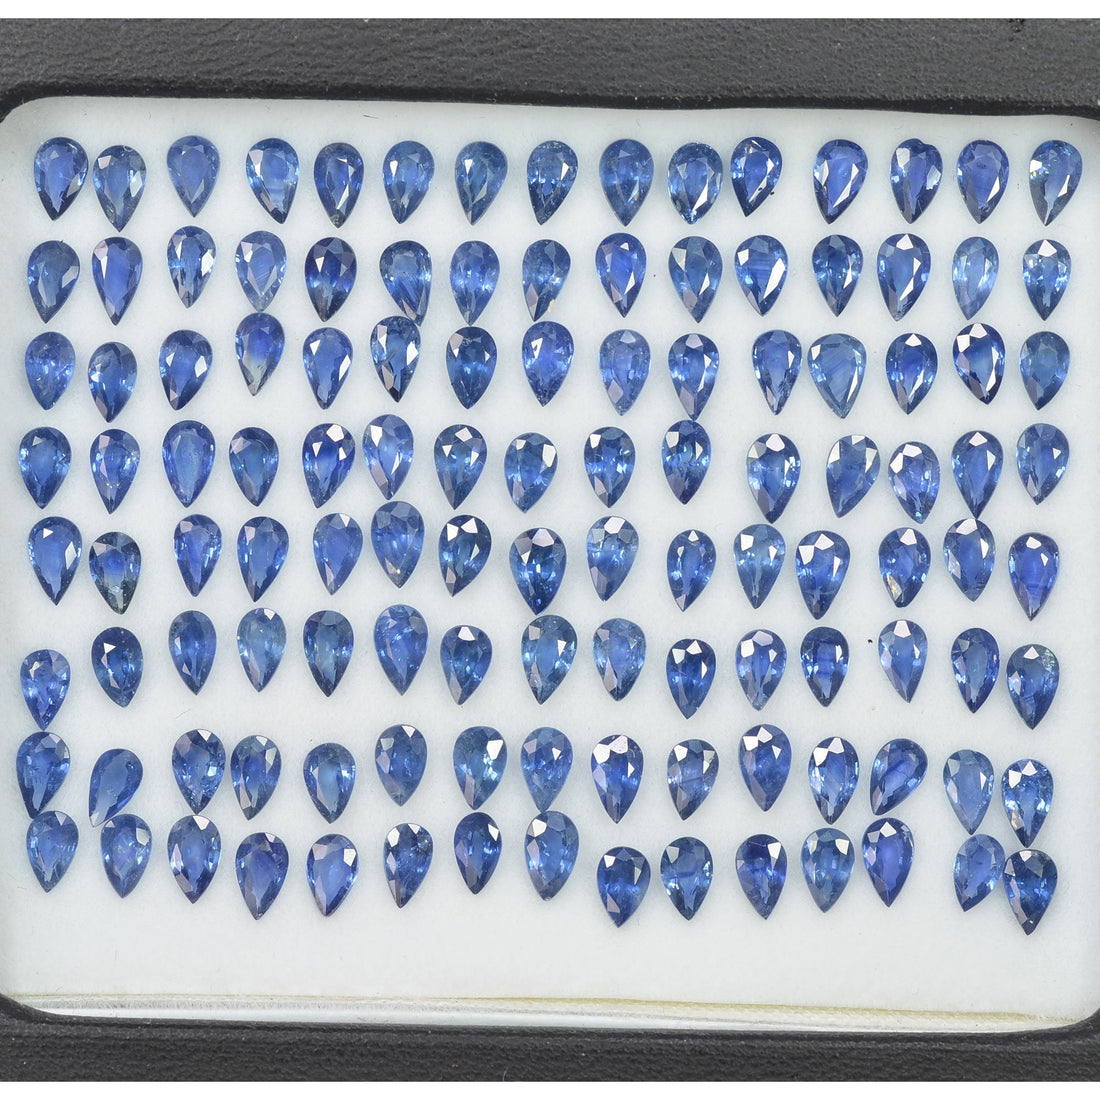 5x4 mm Natural Calibrated Blue Sapphire Loose Gemstone Pear Cut